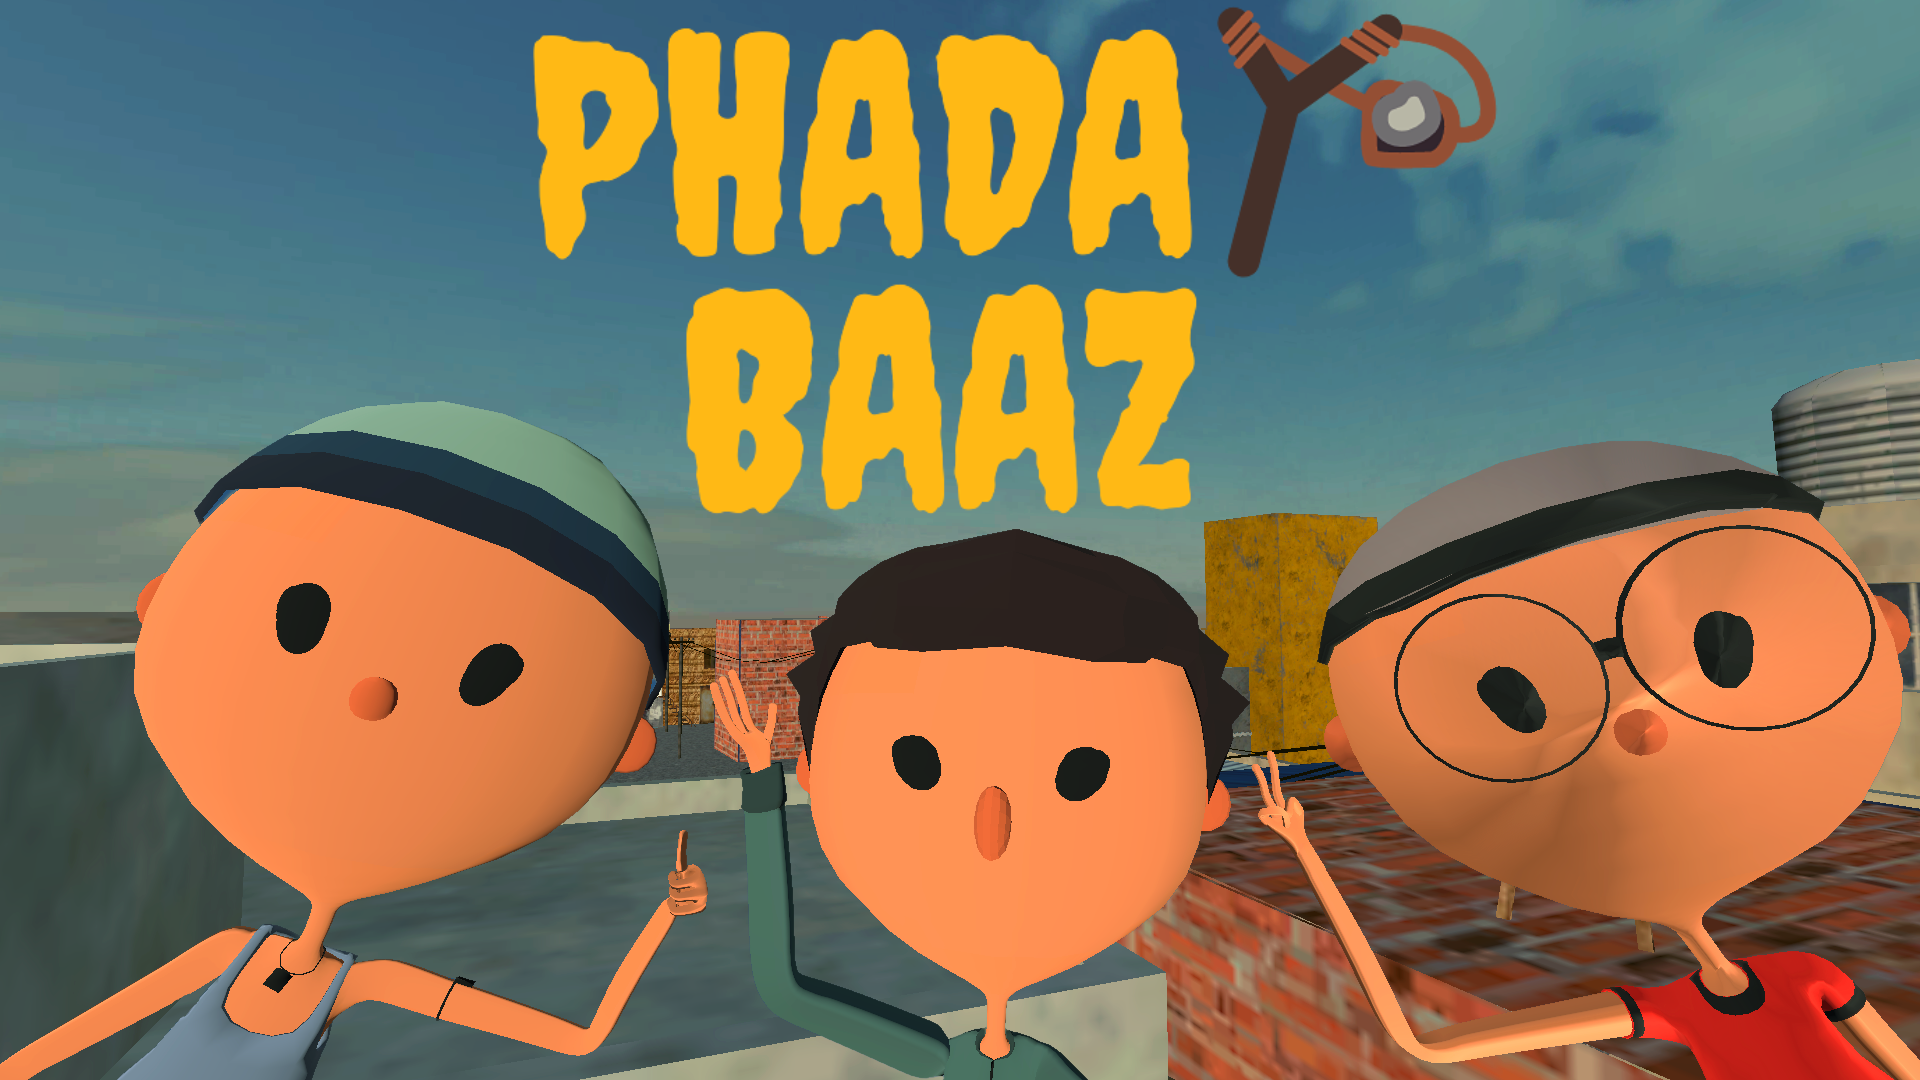 Phadaybaaz